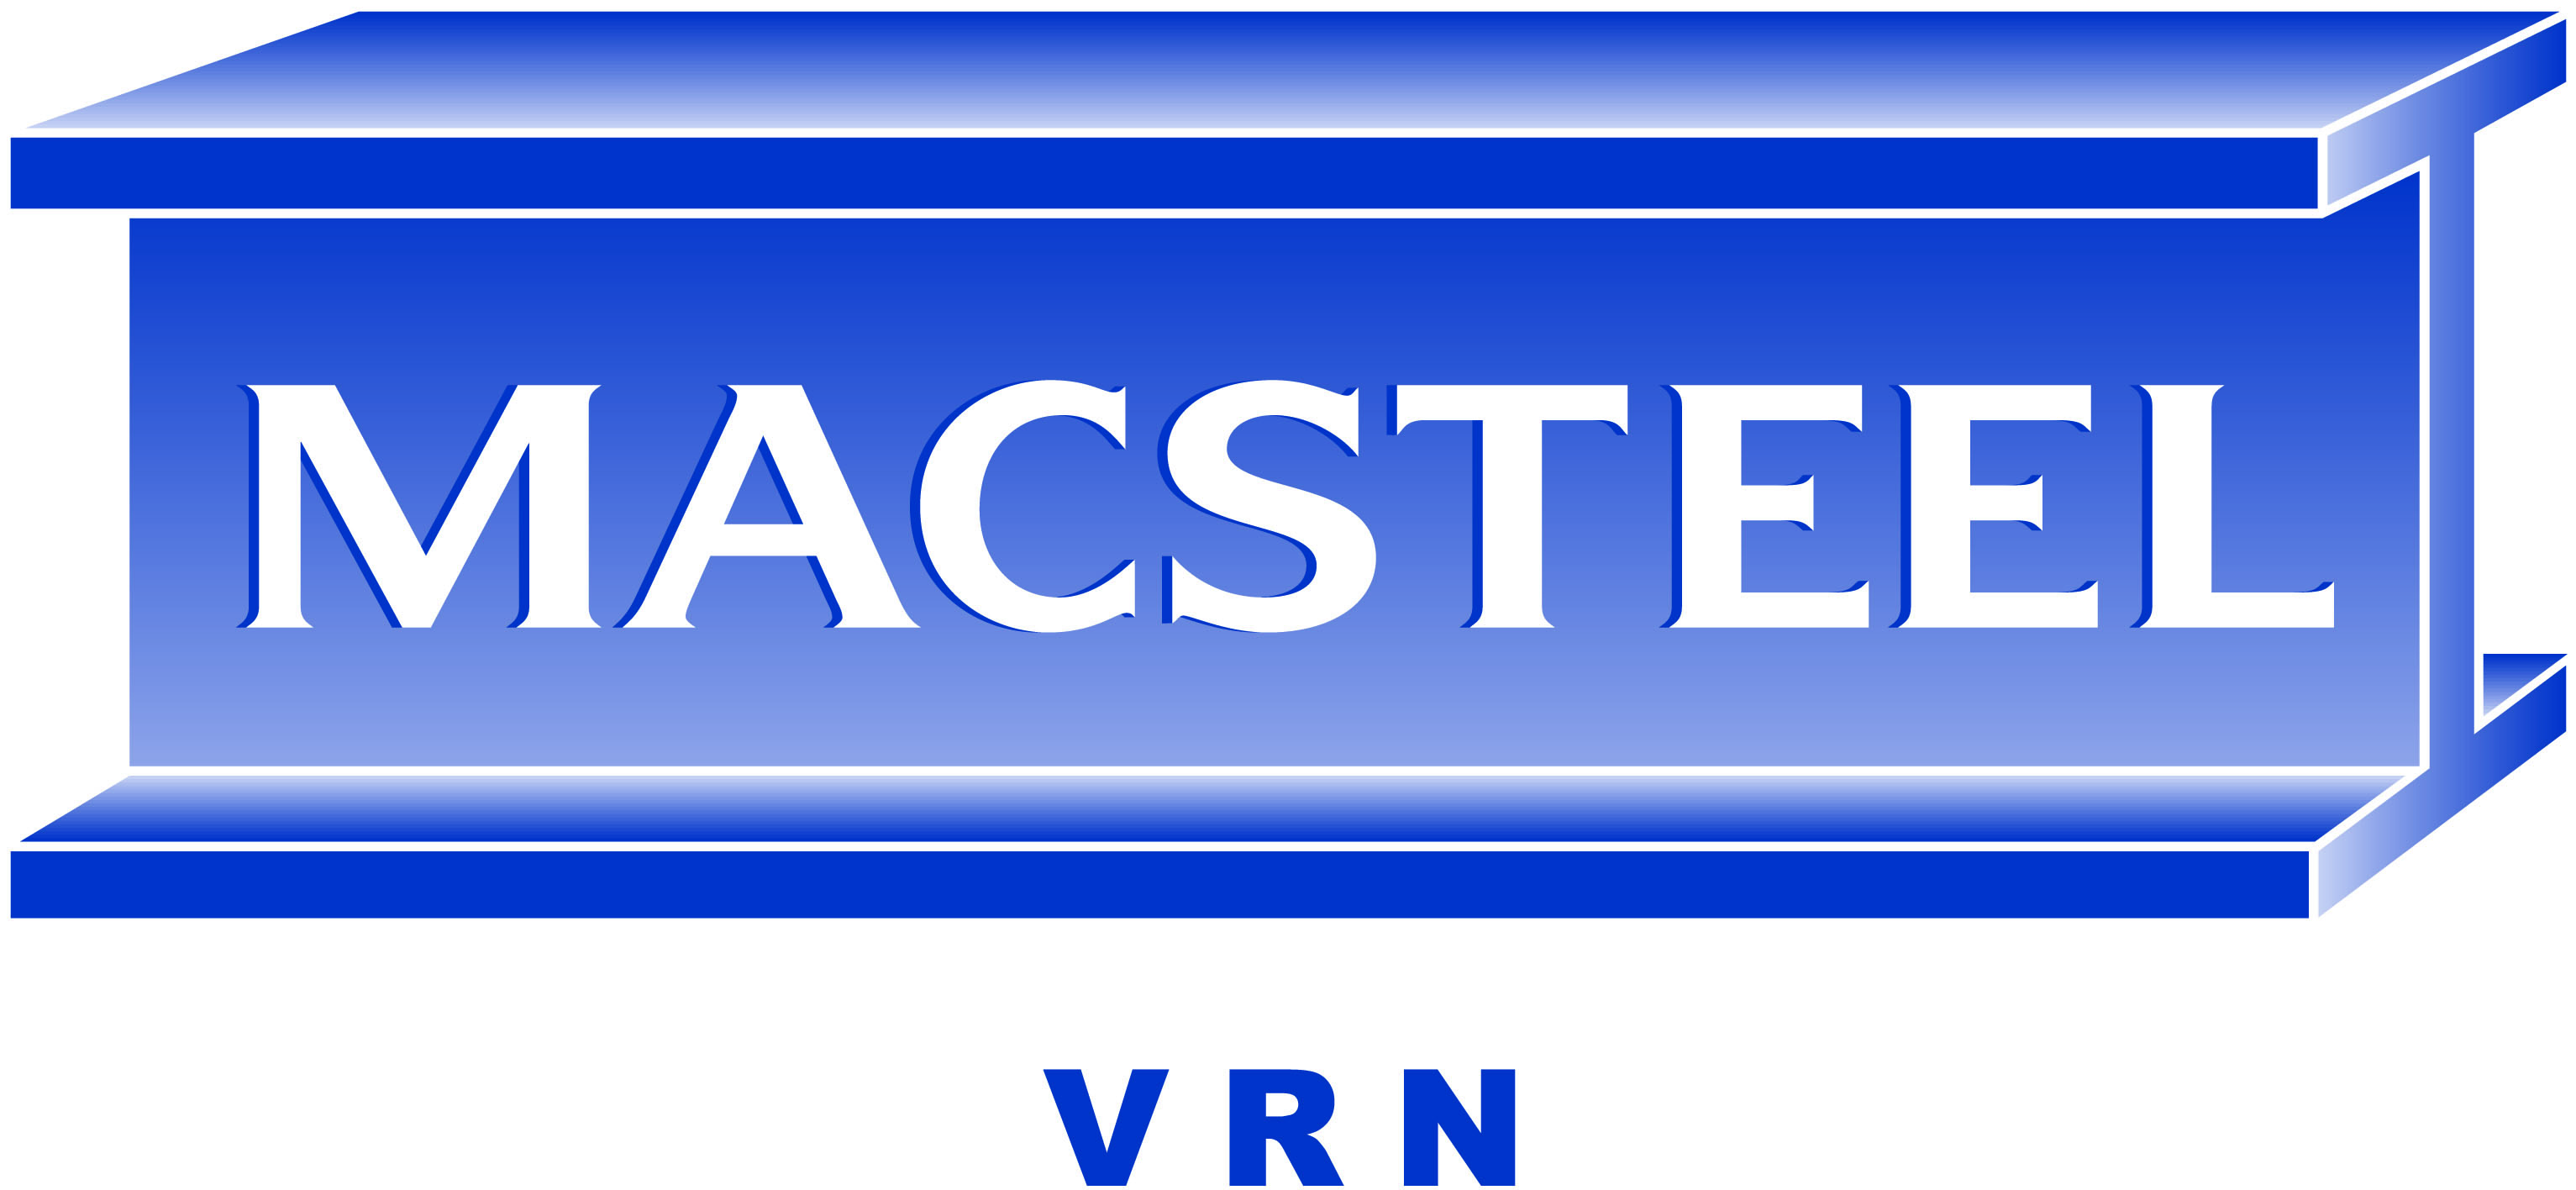 Macsteel Vrn - Witbank logo